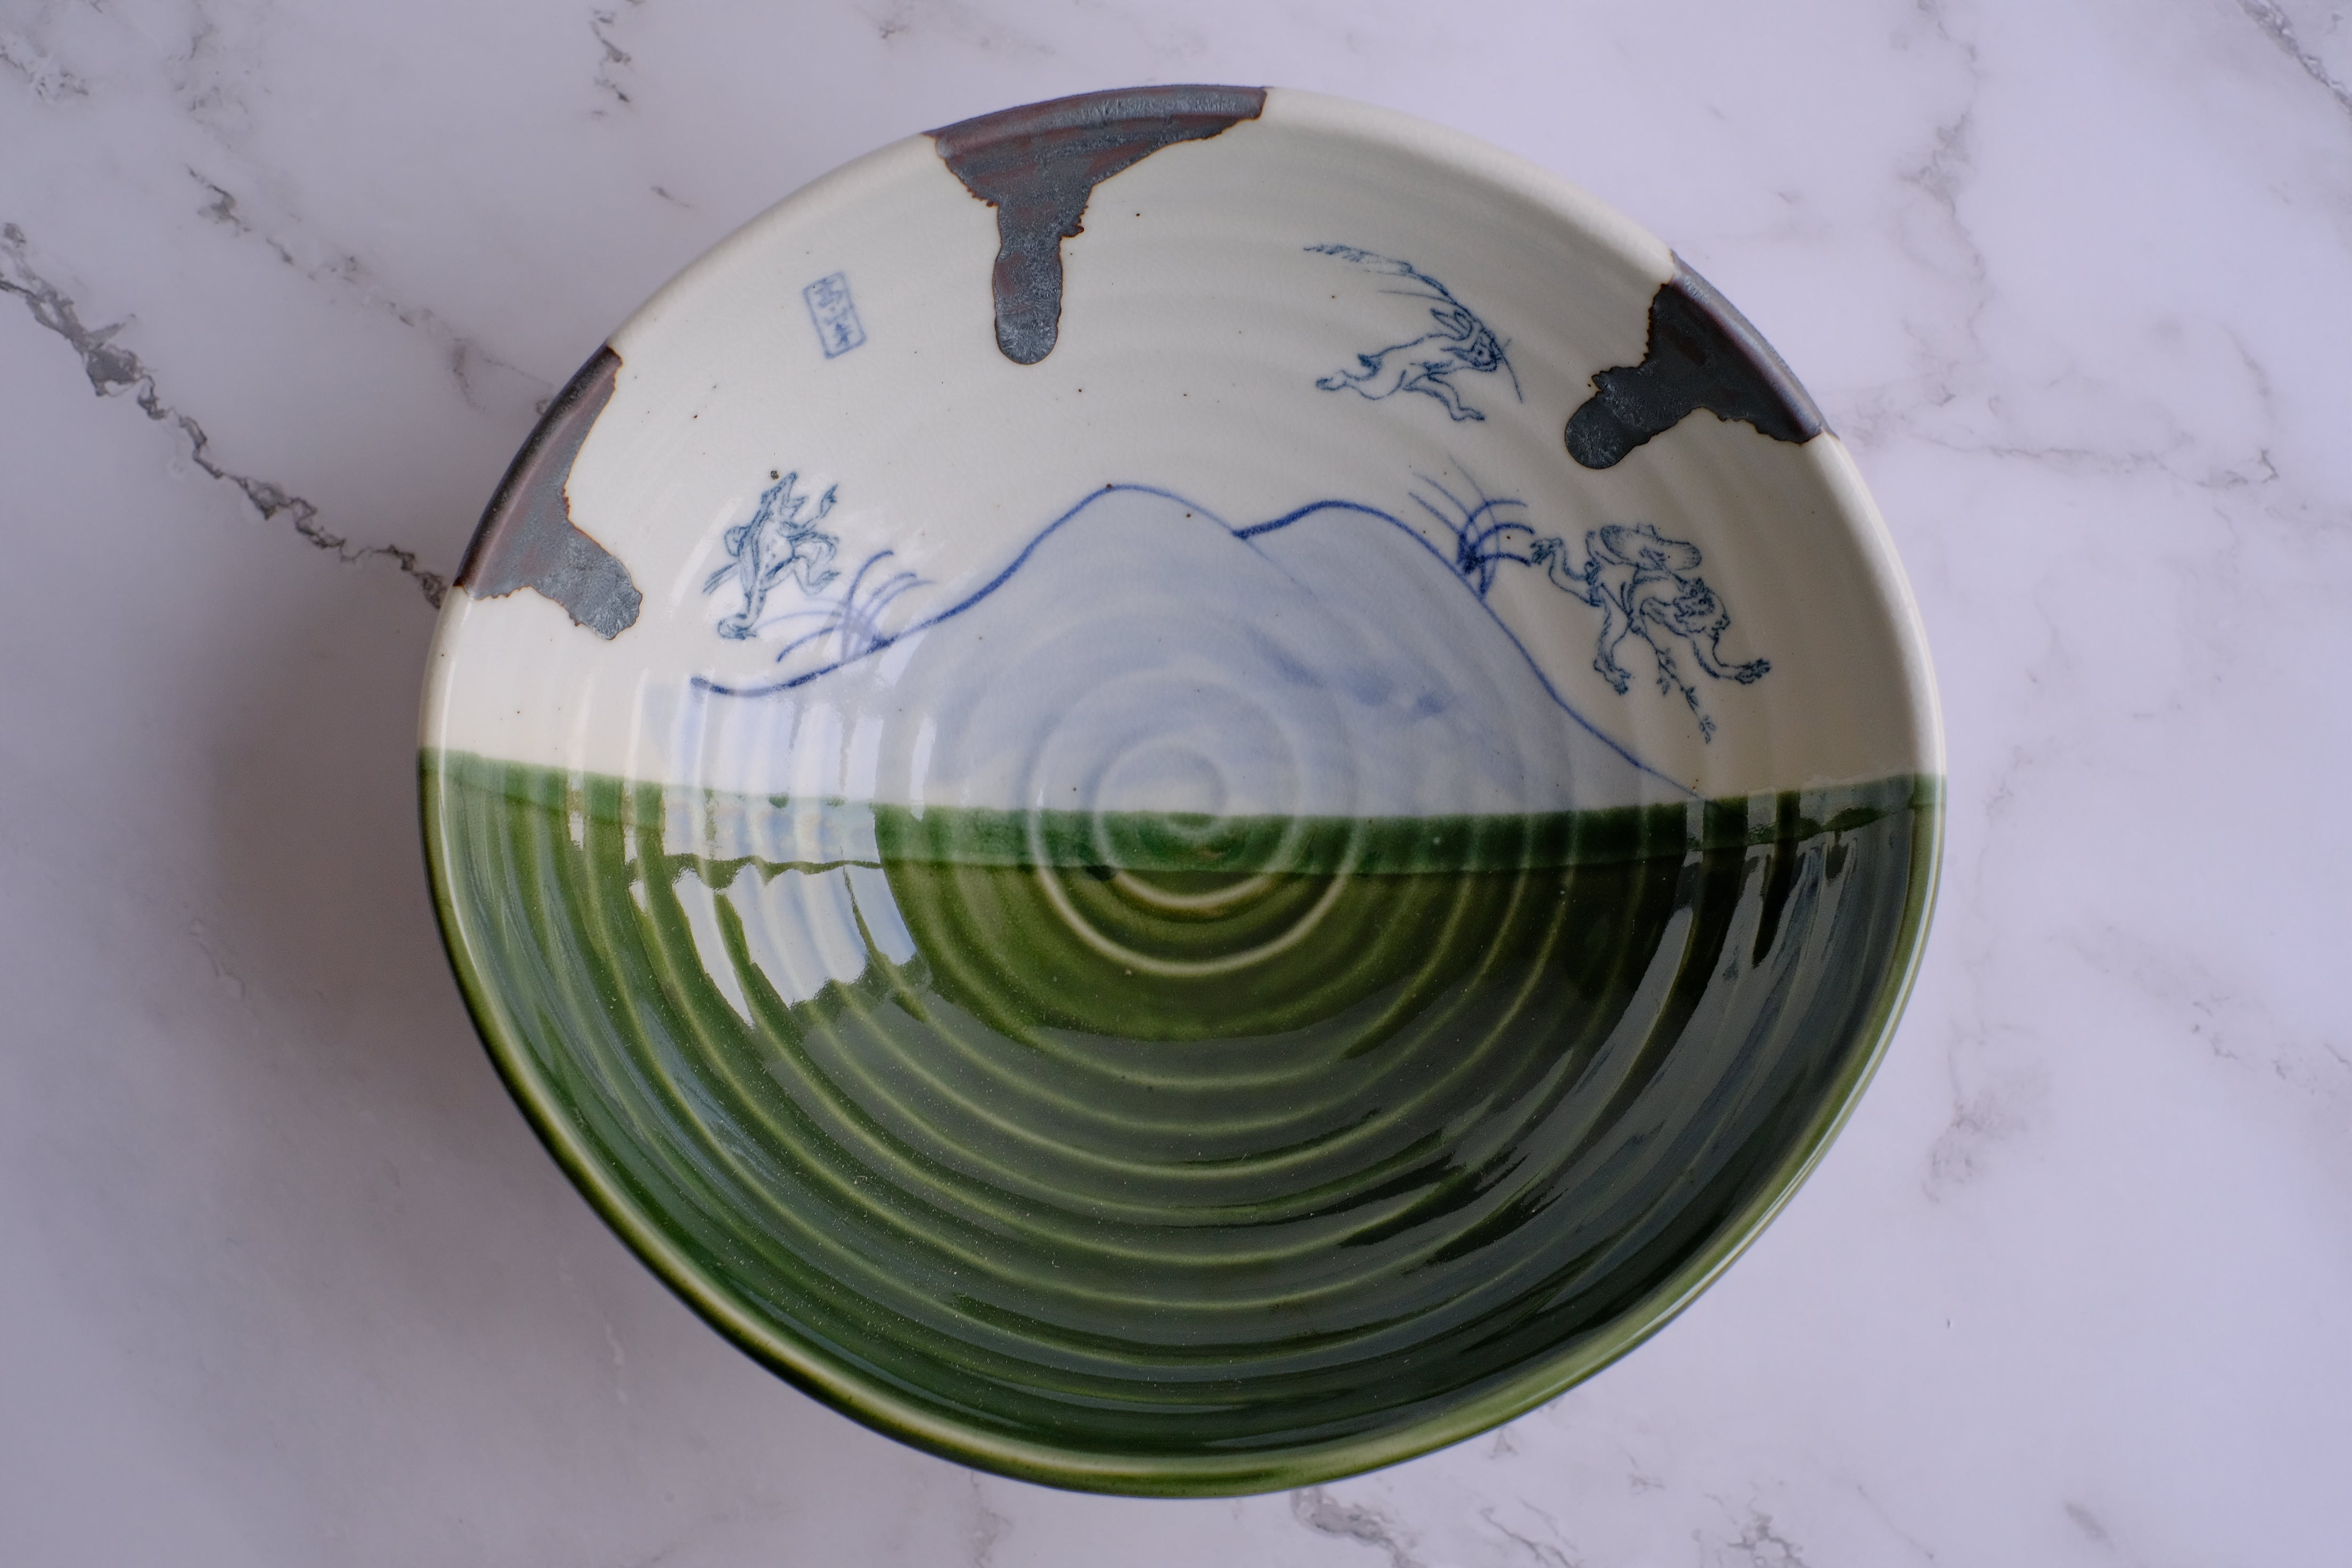 Oribe Tawami Bowl - Special Edition Kozan-ji Choju-giga